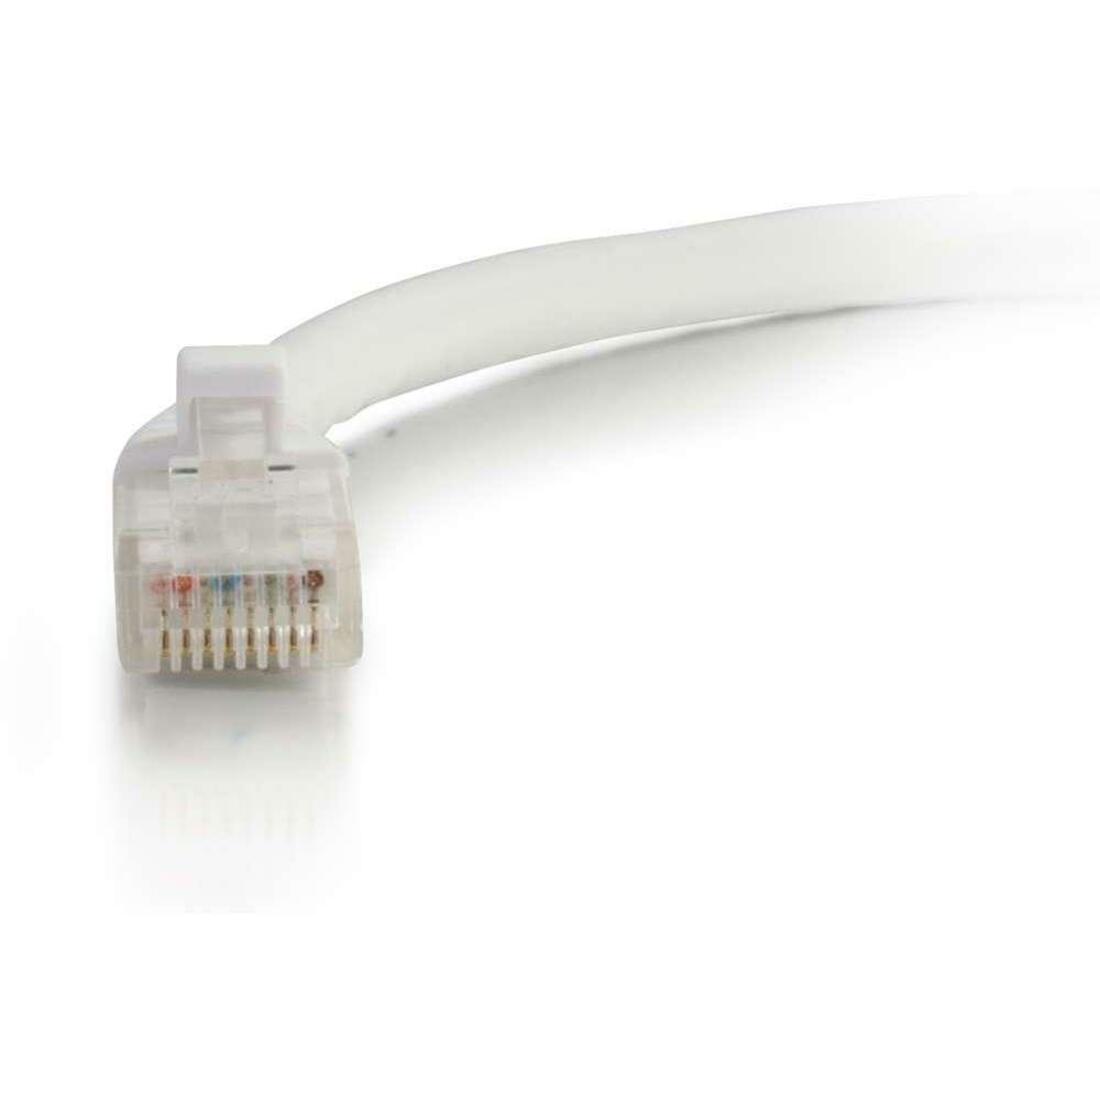 C2G 31353 35ft Cat6 Snagless Ethernet Network Cable Blanco Garantía de por vida Marca: C2G (Cables To Go)